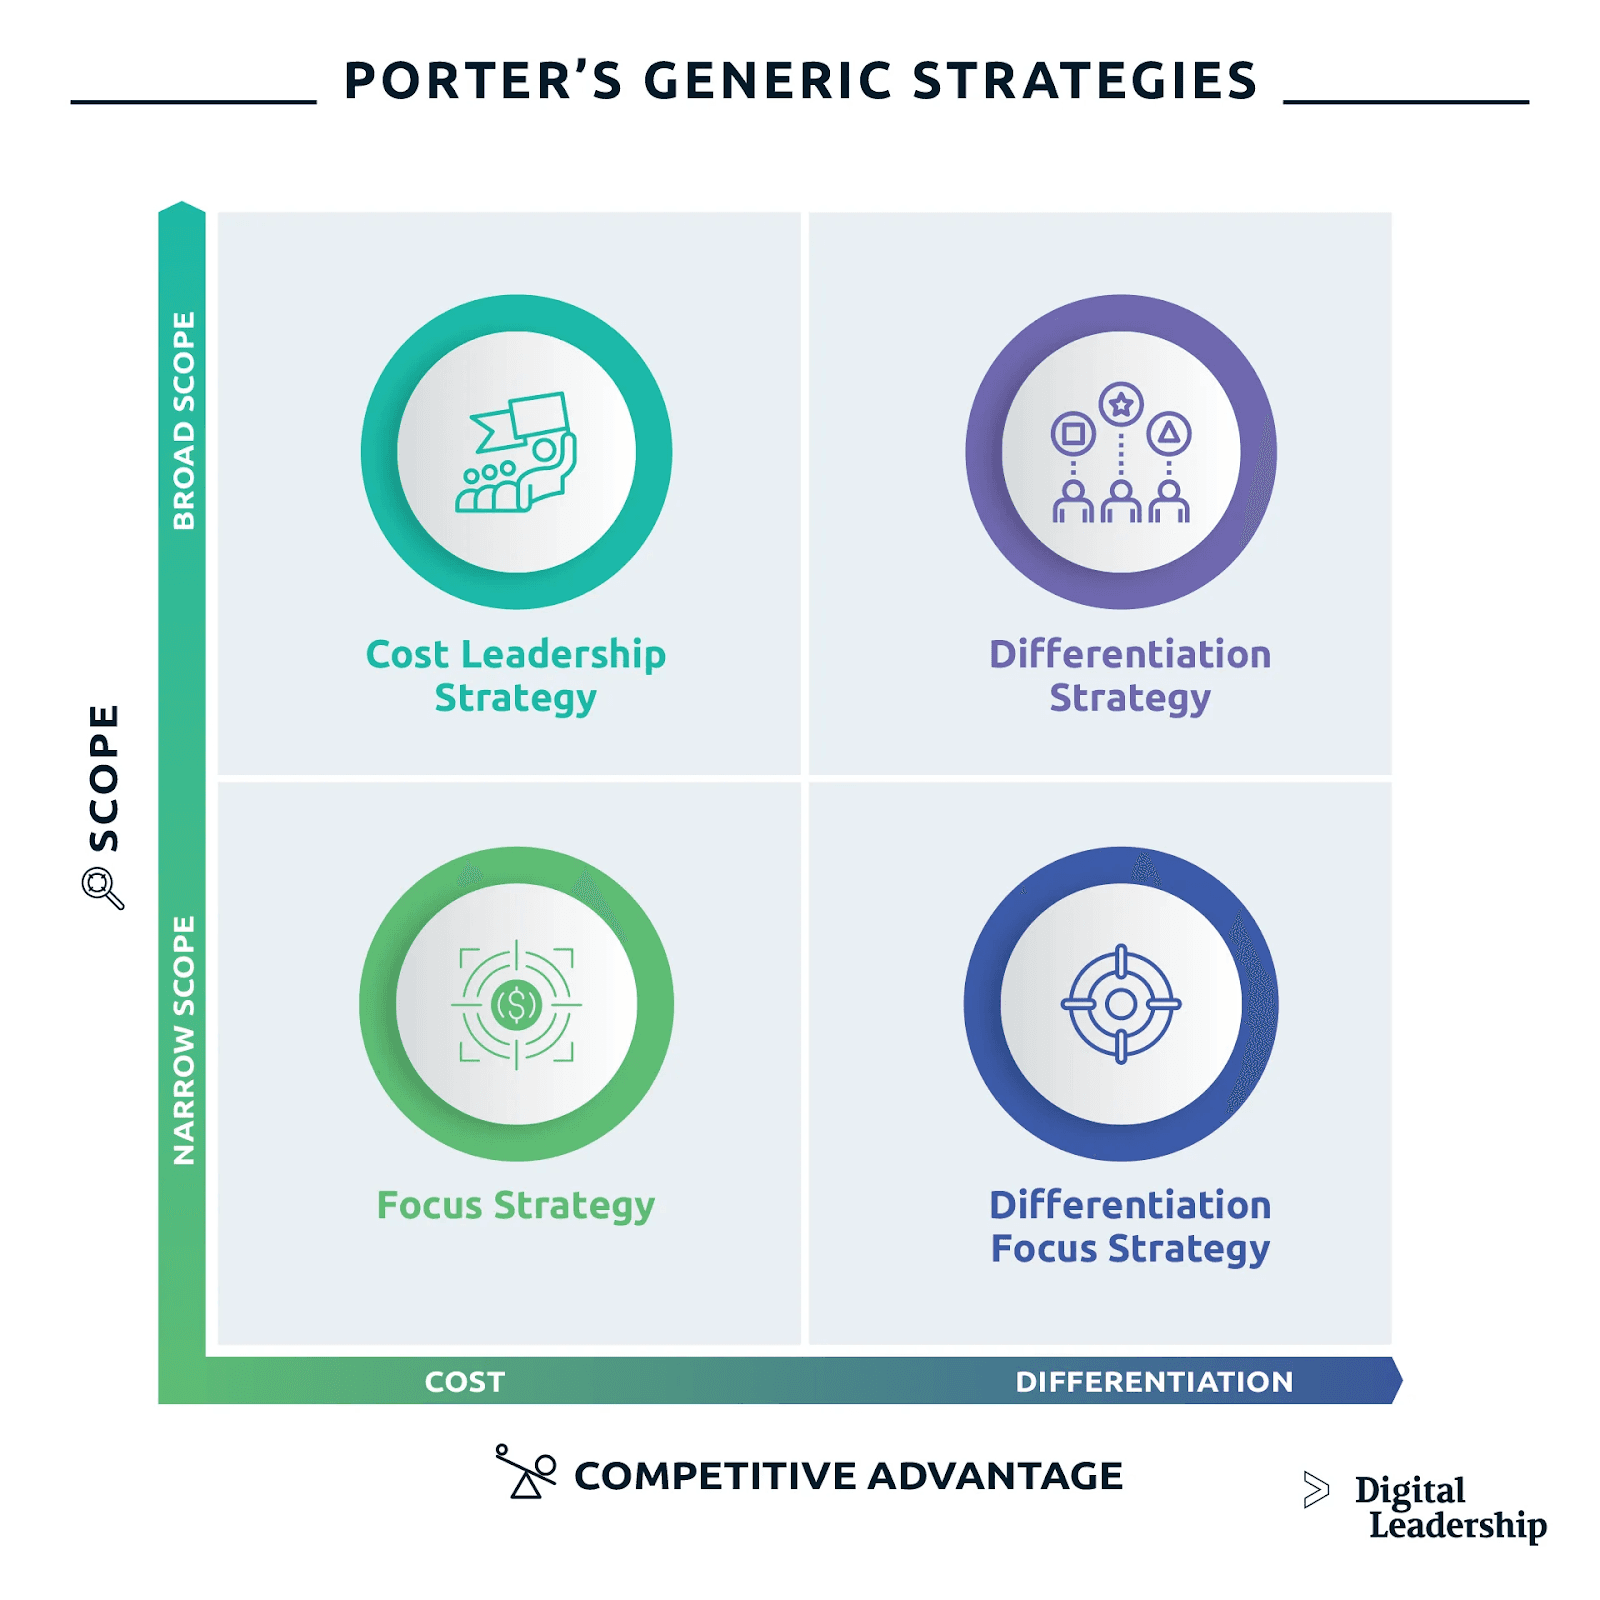 Porter's Generic Strategies by Digital Leadership for Product Marketing Strategies